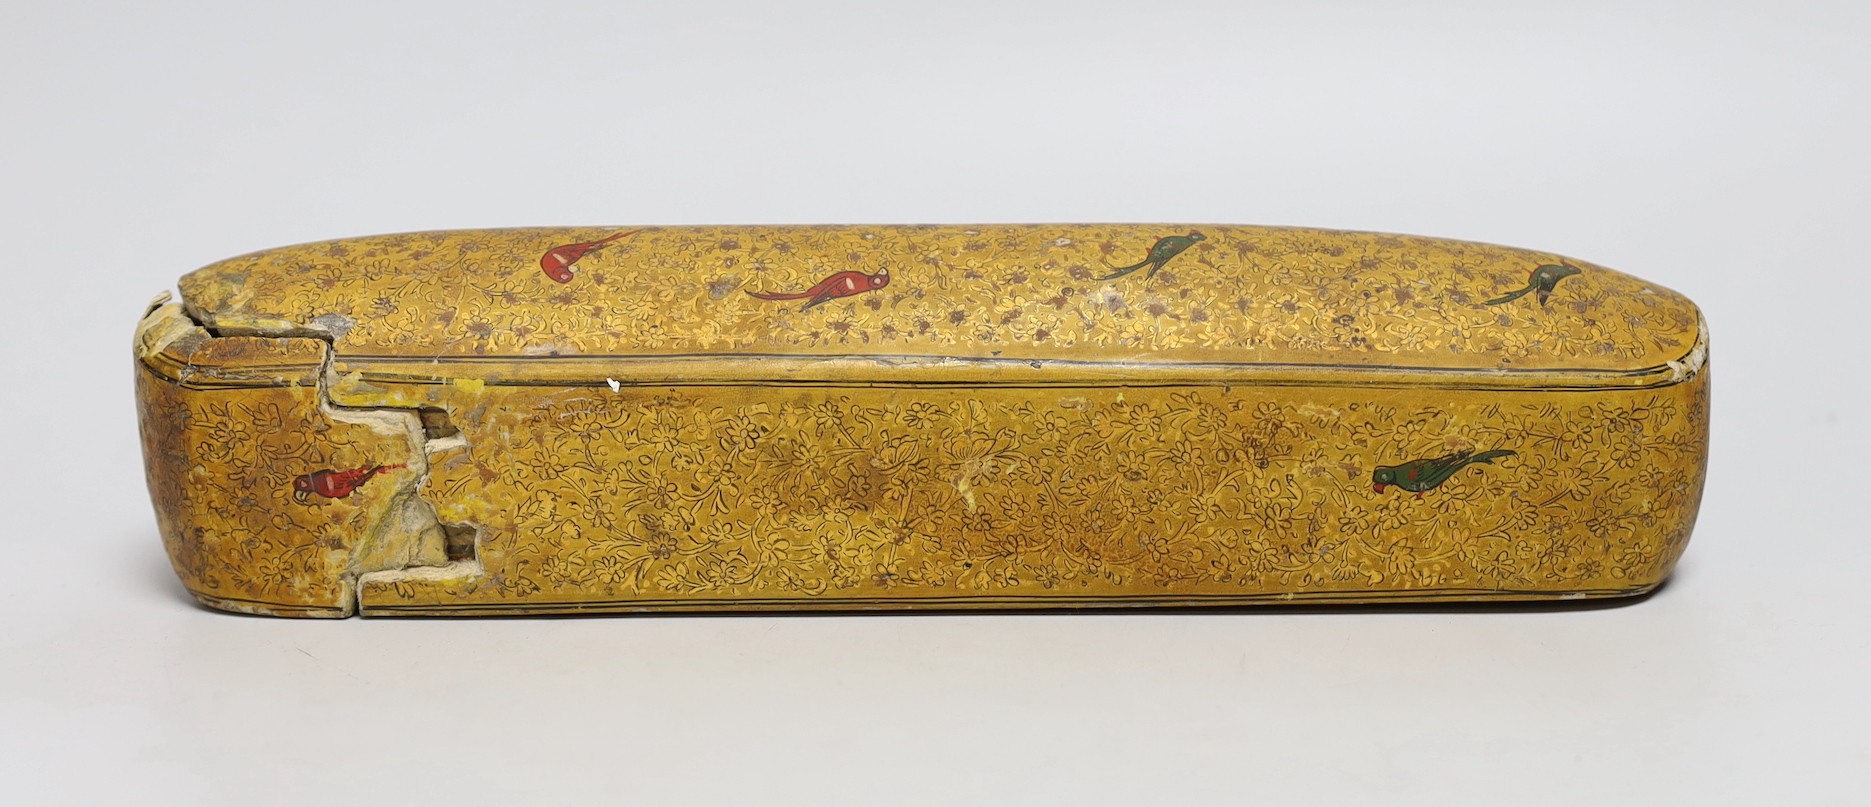 A 19th century Persian papier mache scribe's box, 30cms long